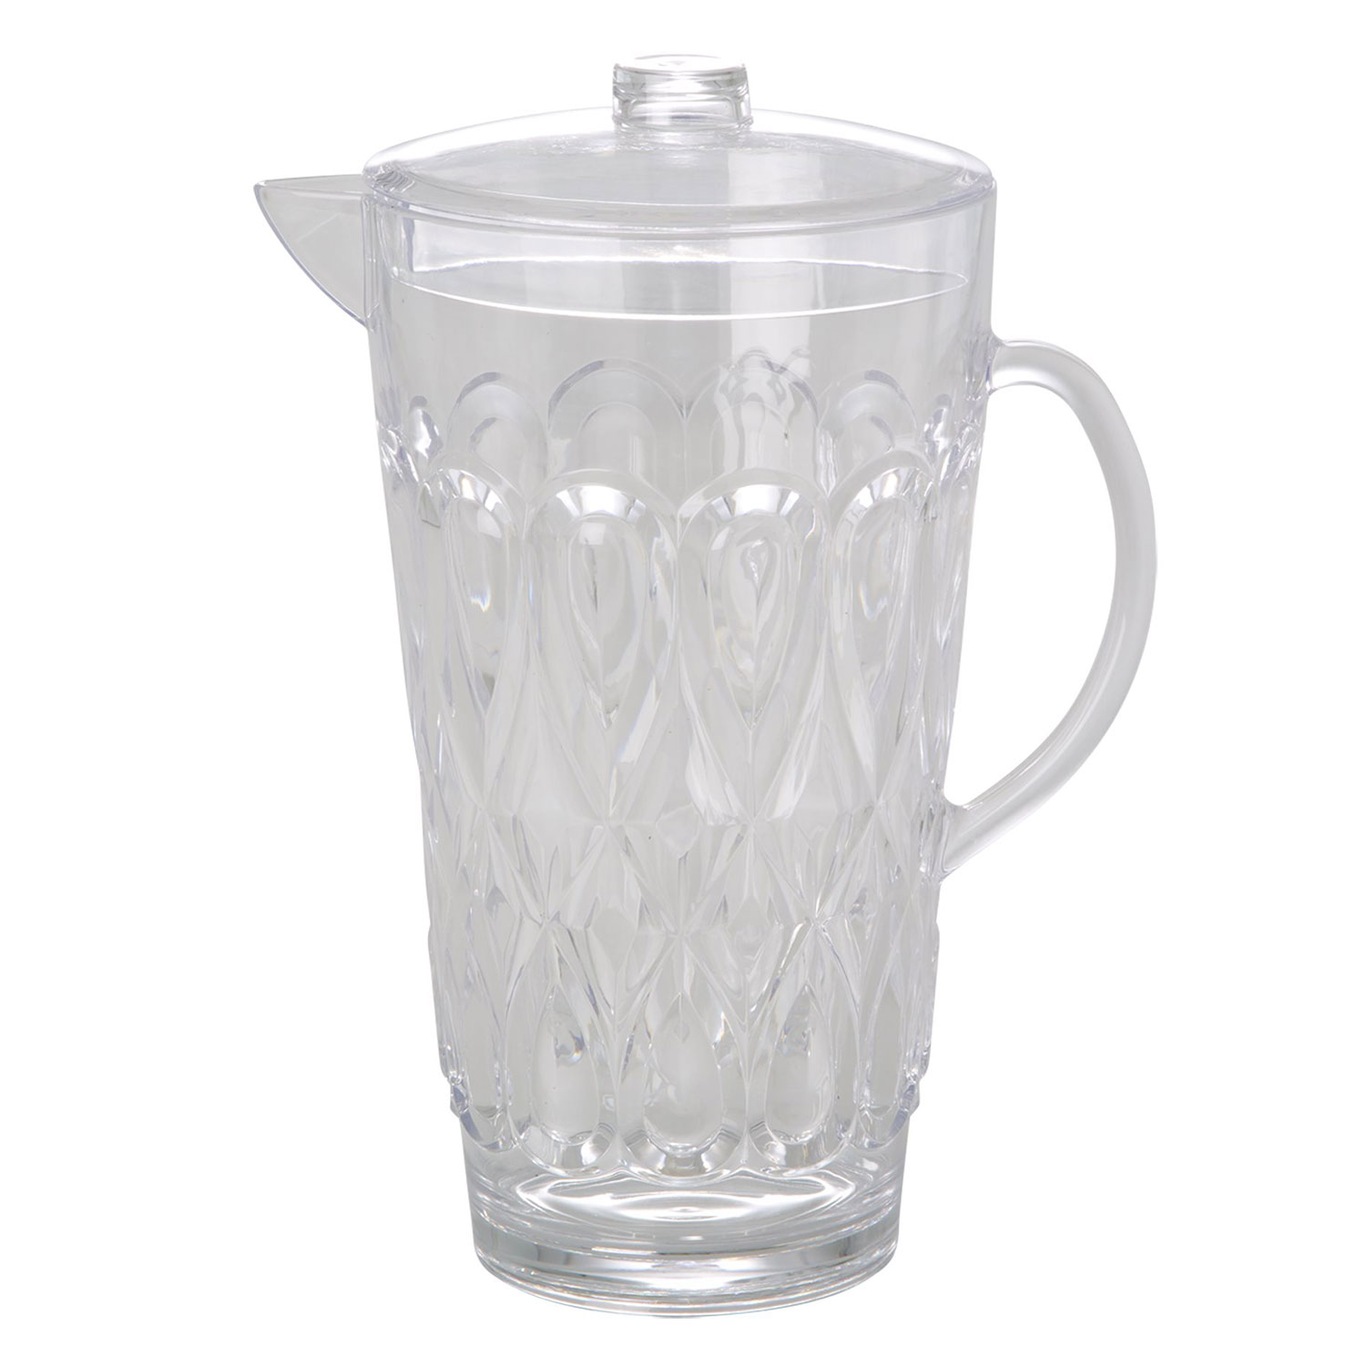 https://royaldesign.com/image/11/rice-rice-pitcher-acrylic-6?w=800&quality=80